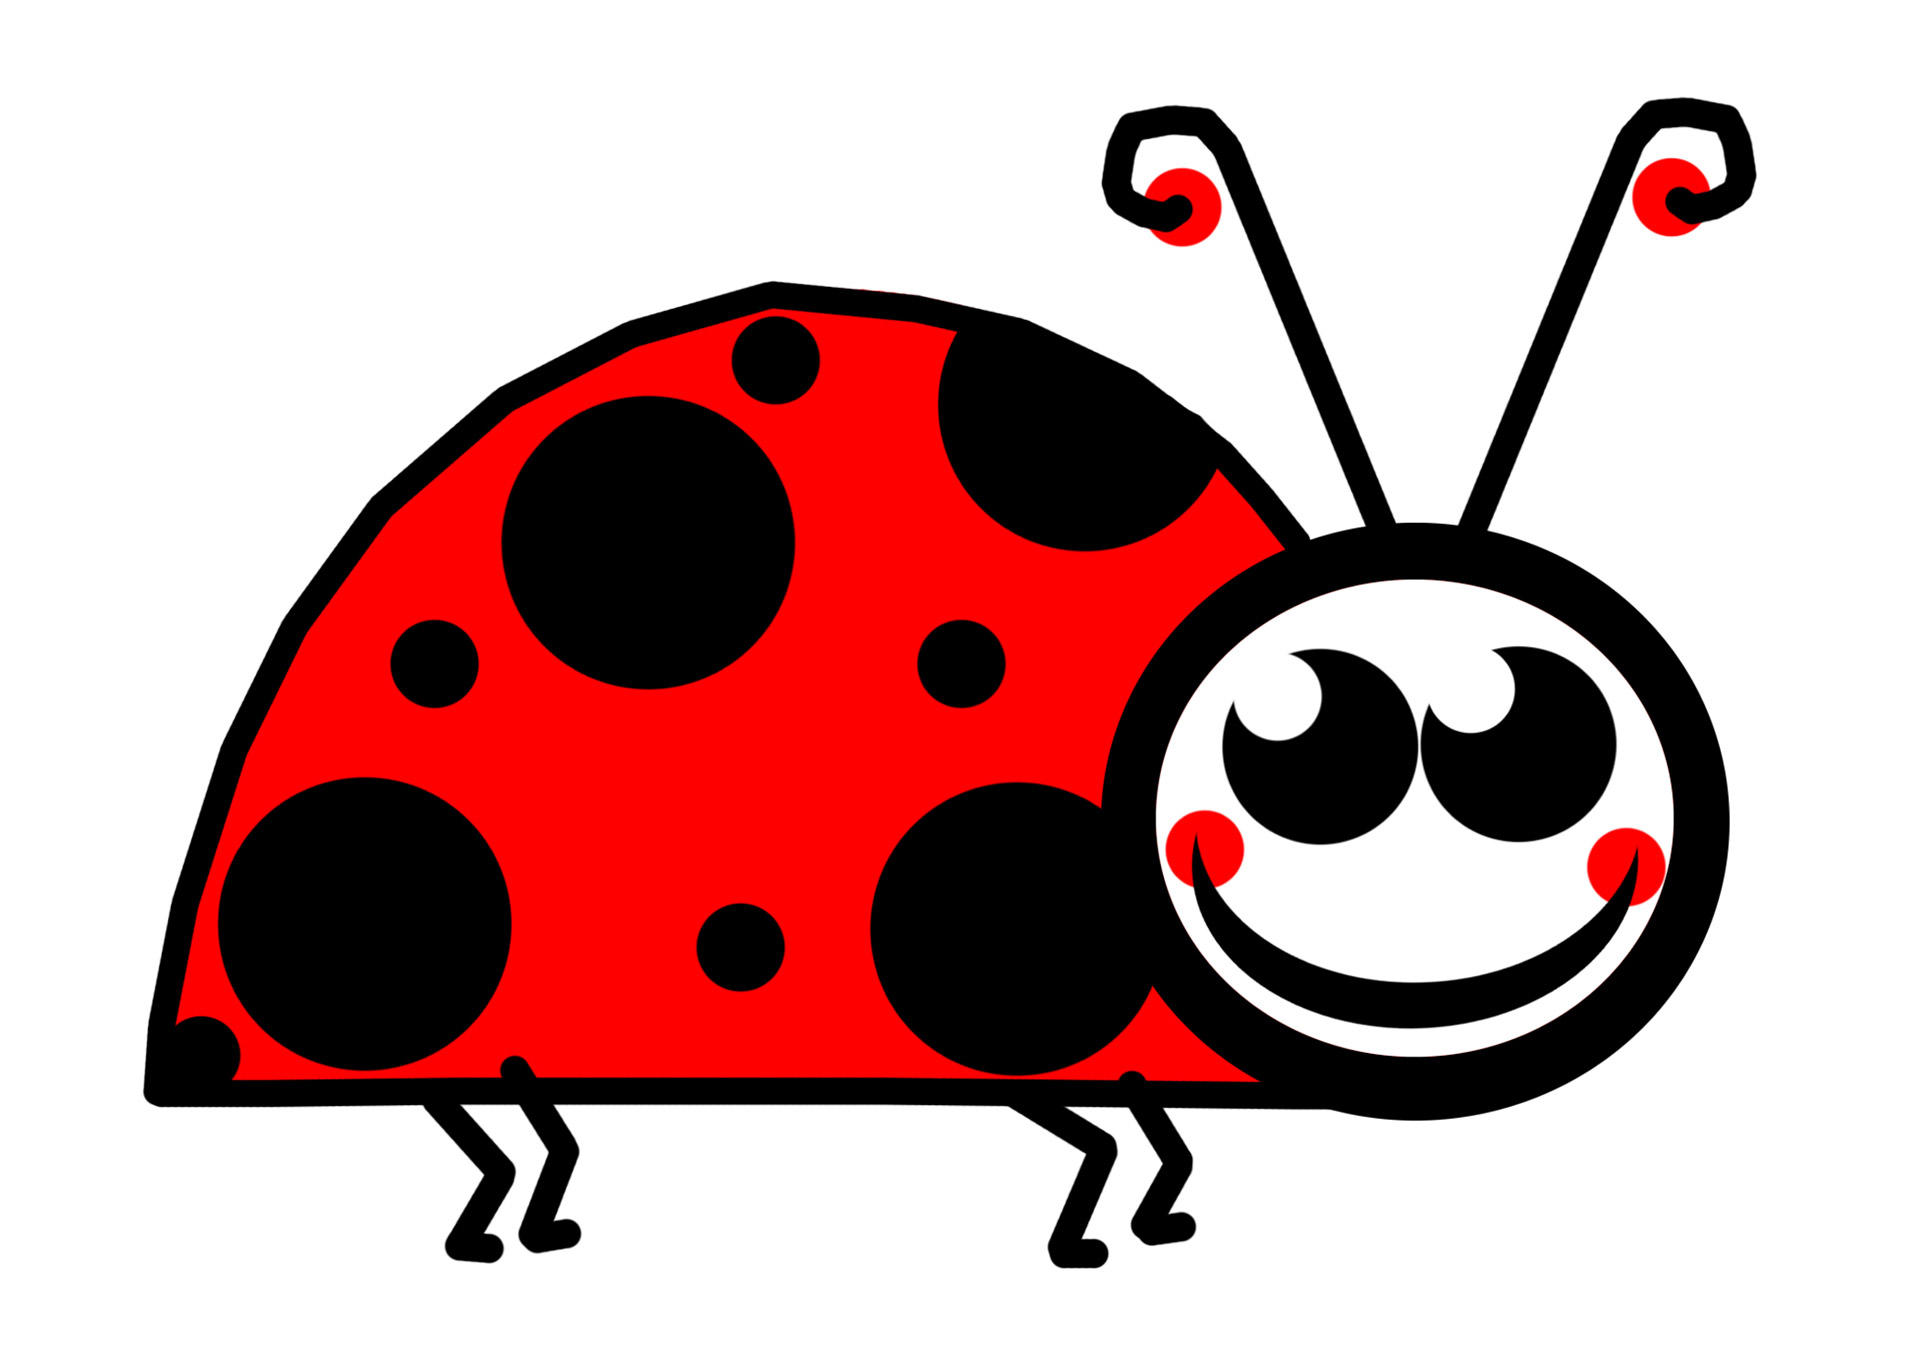 ... Ladybug Mascot Cartoon Ch